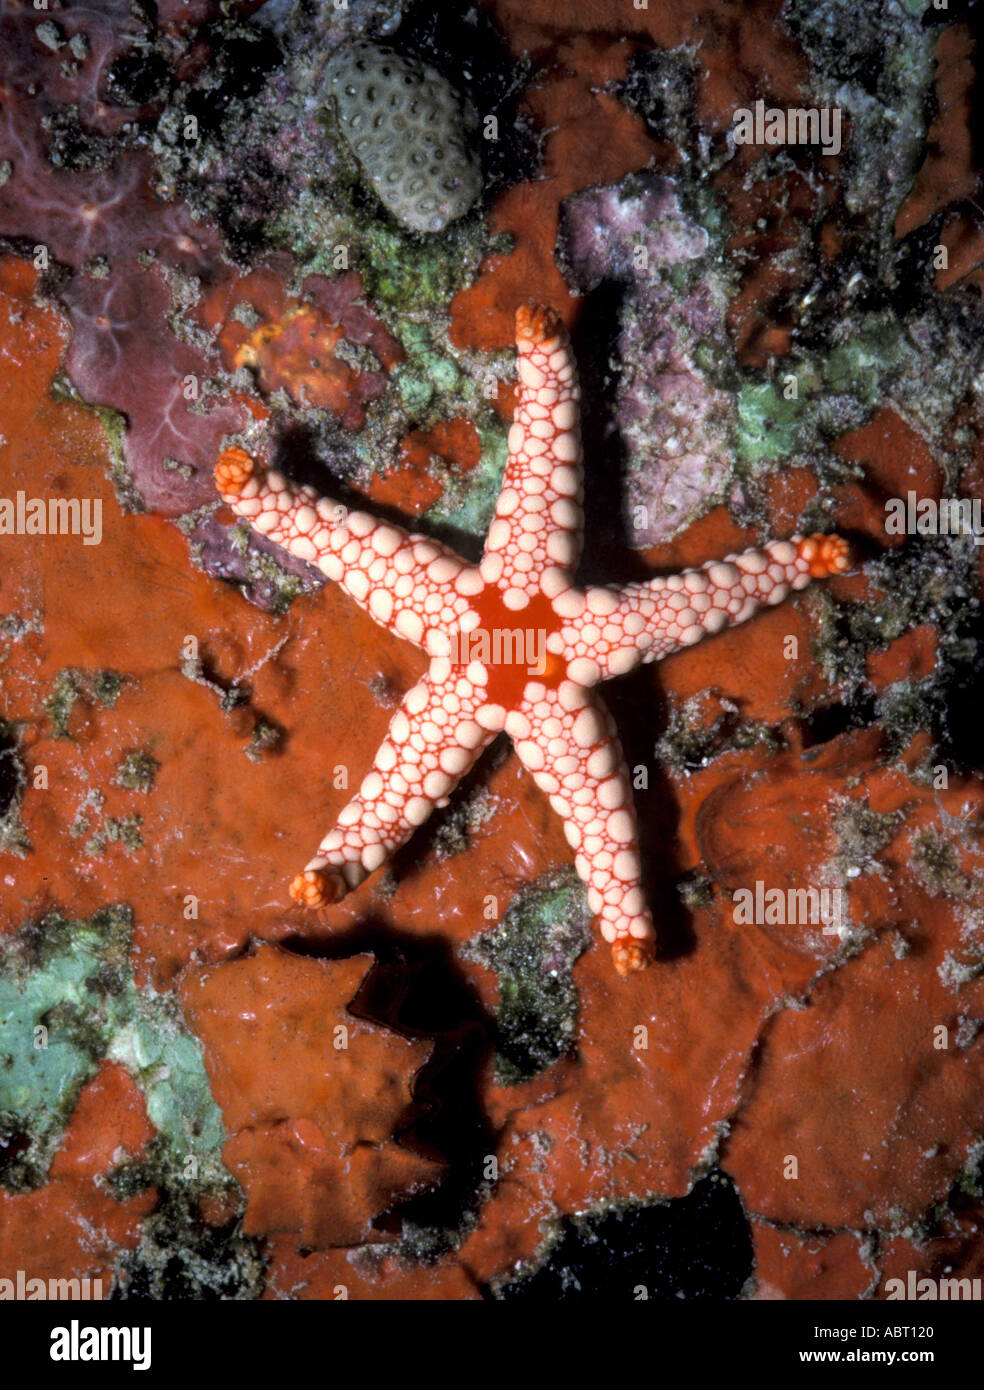 Seychelles Starfish on sponge Stock Photo